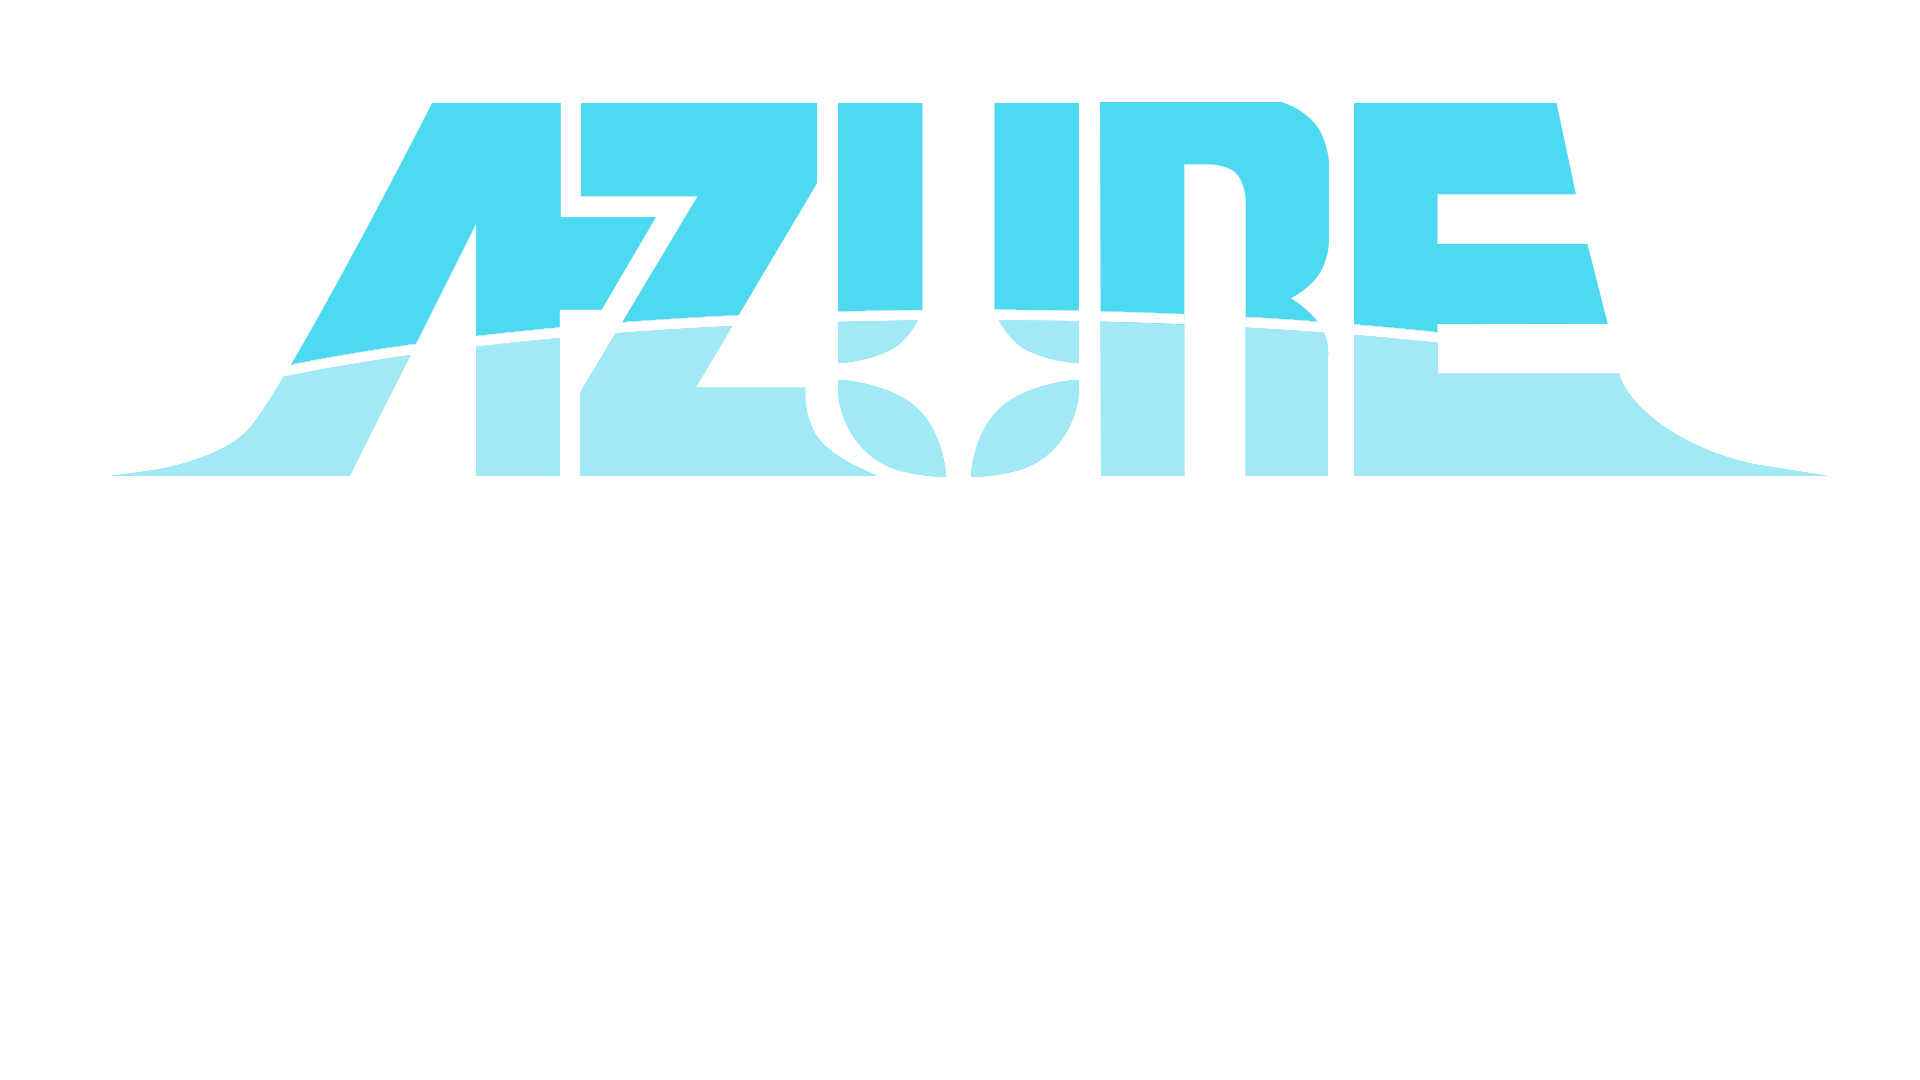 Azure Skies - Local Multiplayer Demo